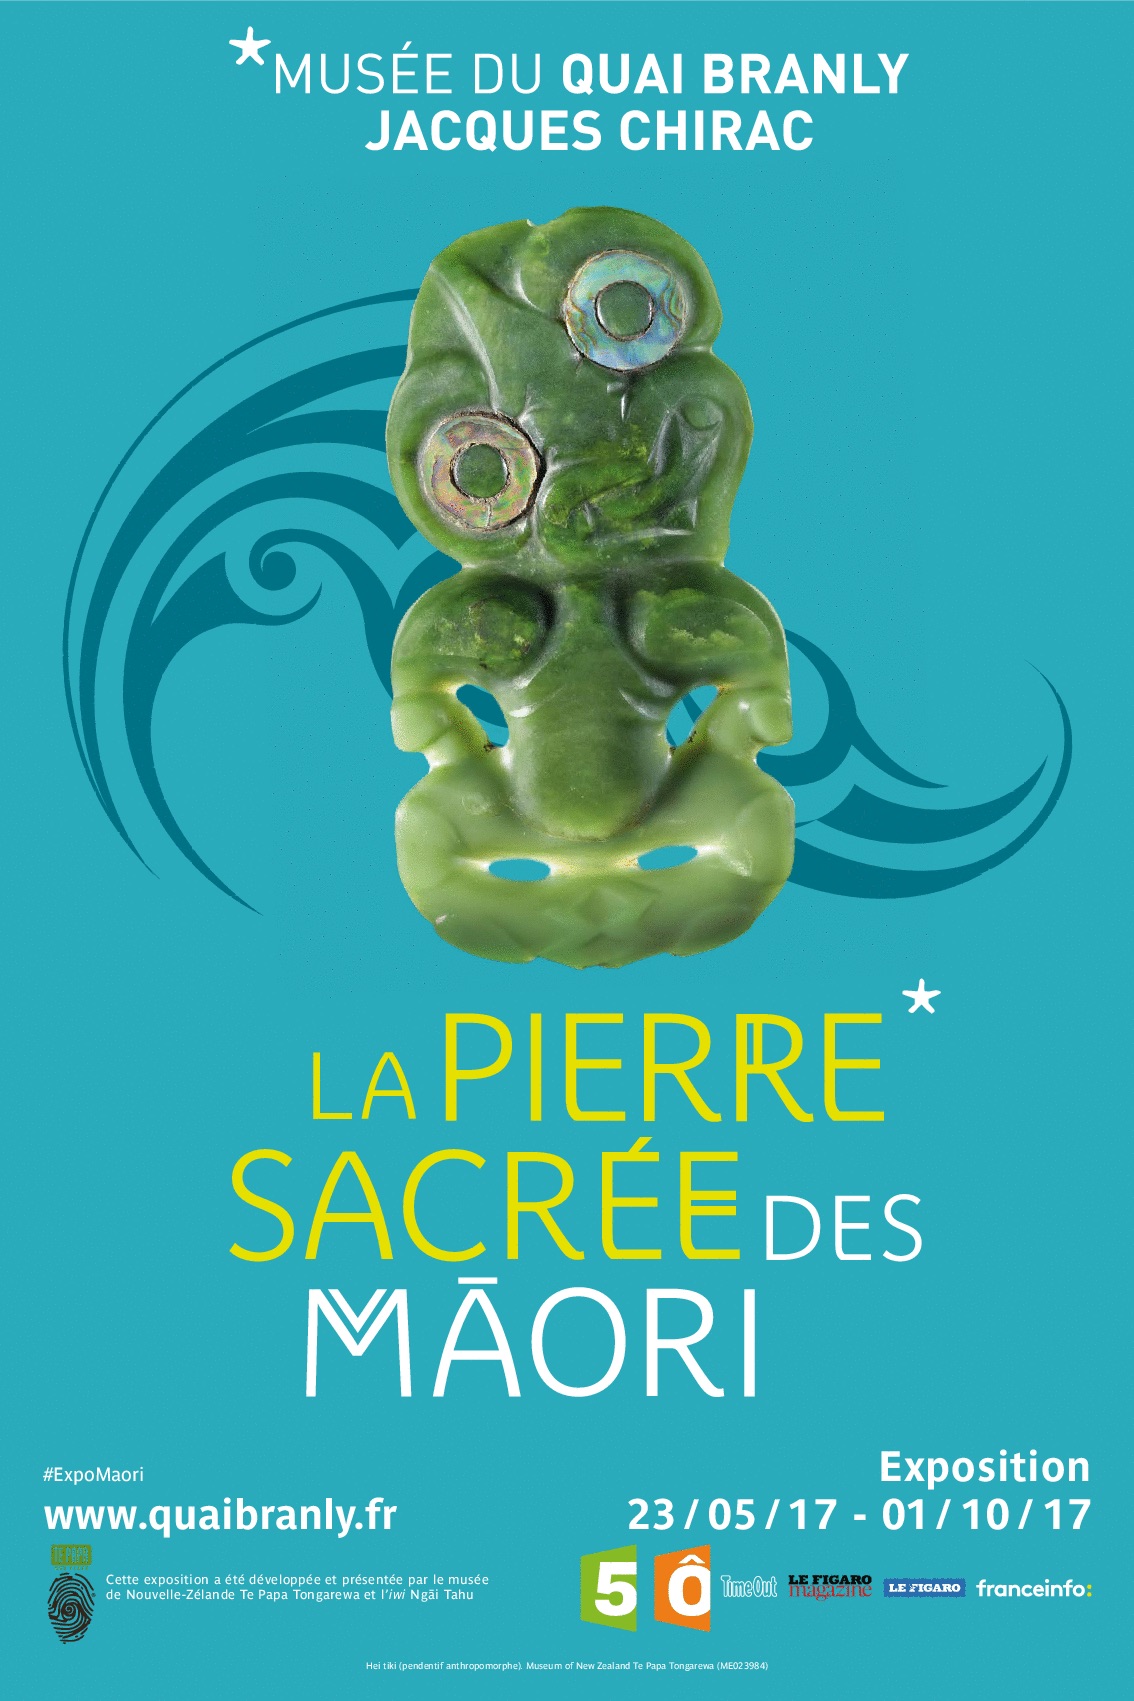 La pierre sacrée des Maori